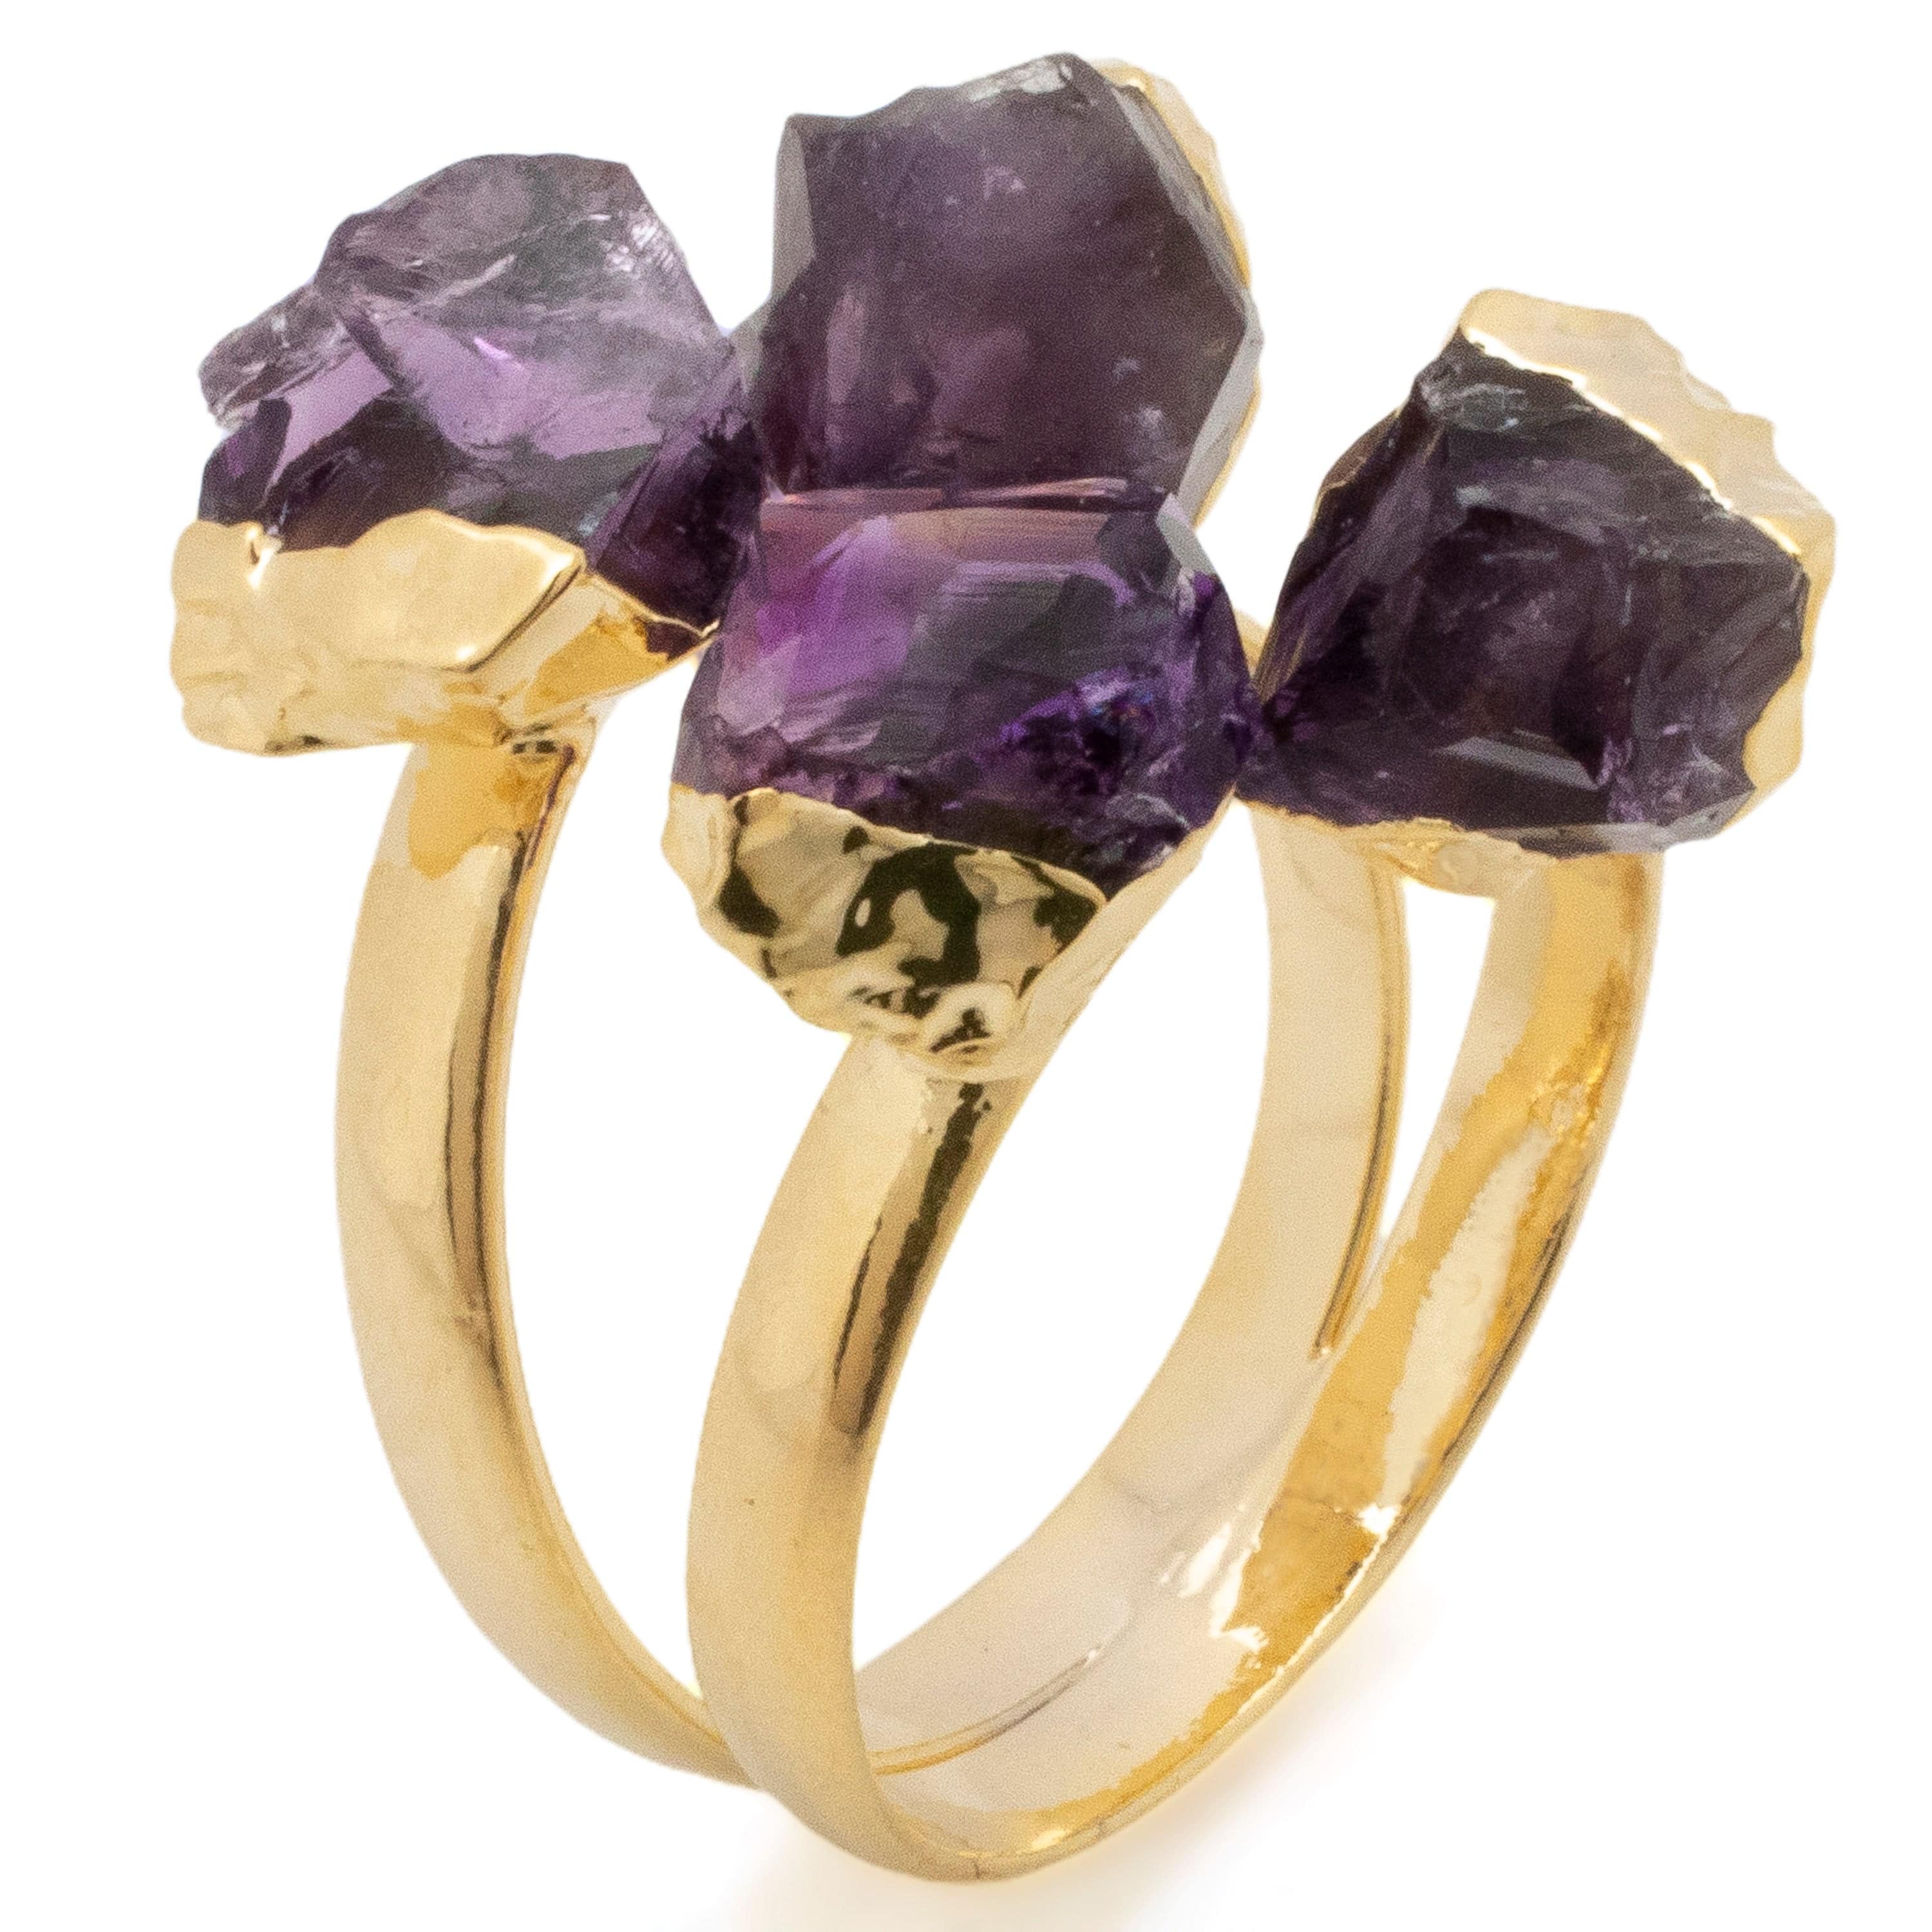 KALIFANO Crystal Jewelry Adjustable Amethyst Ring CJR-513-AM